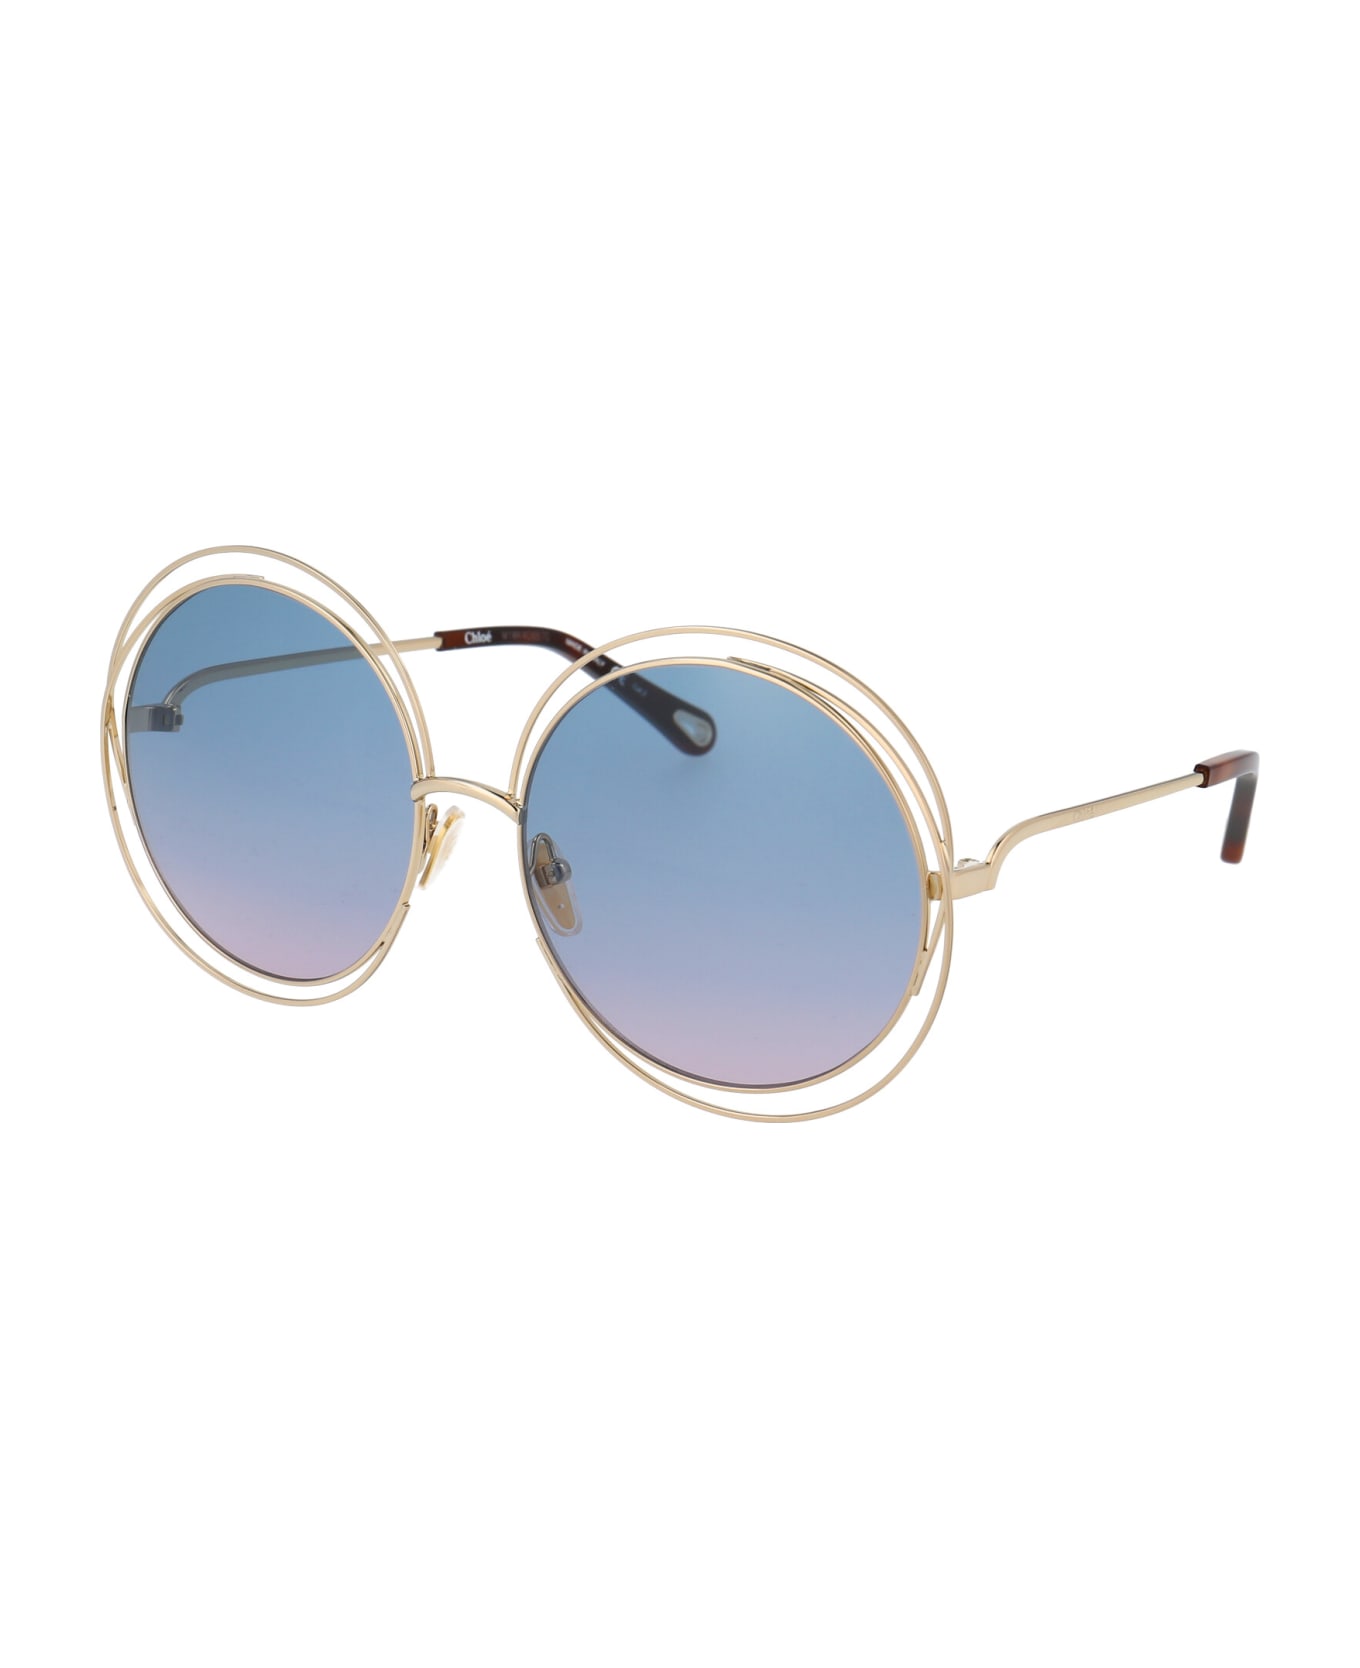 Chloé Eyewear Ch0045s Sunglasses - 003 GOLD GOLD BLUE サングラス